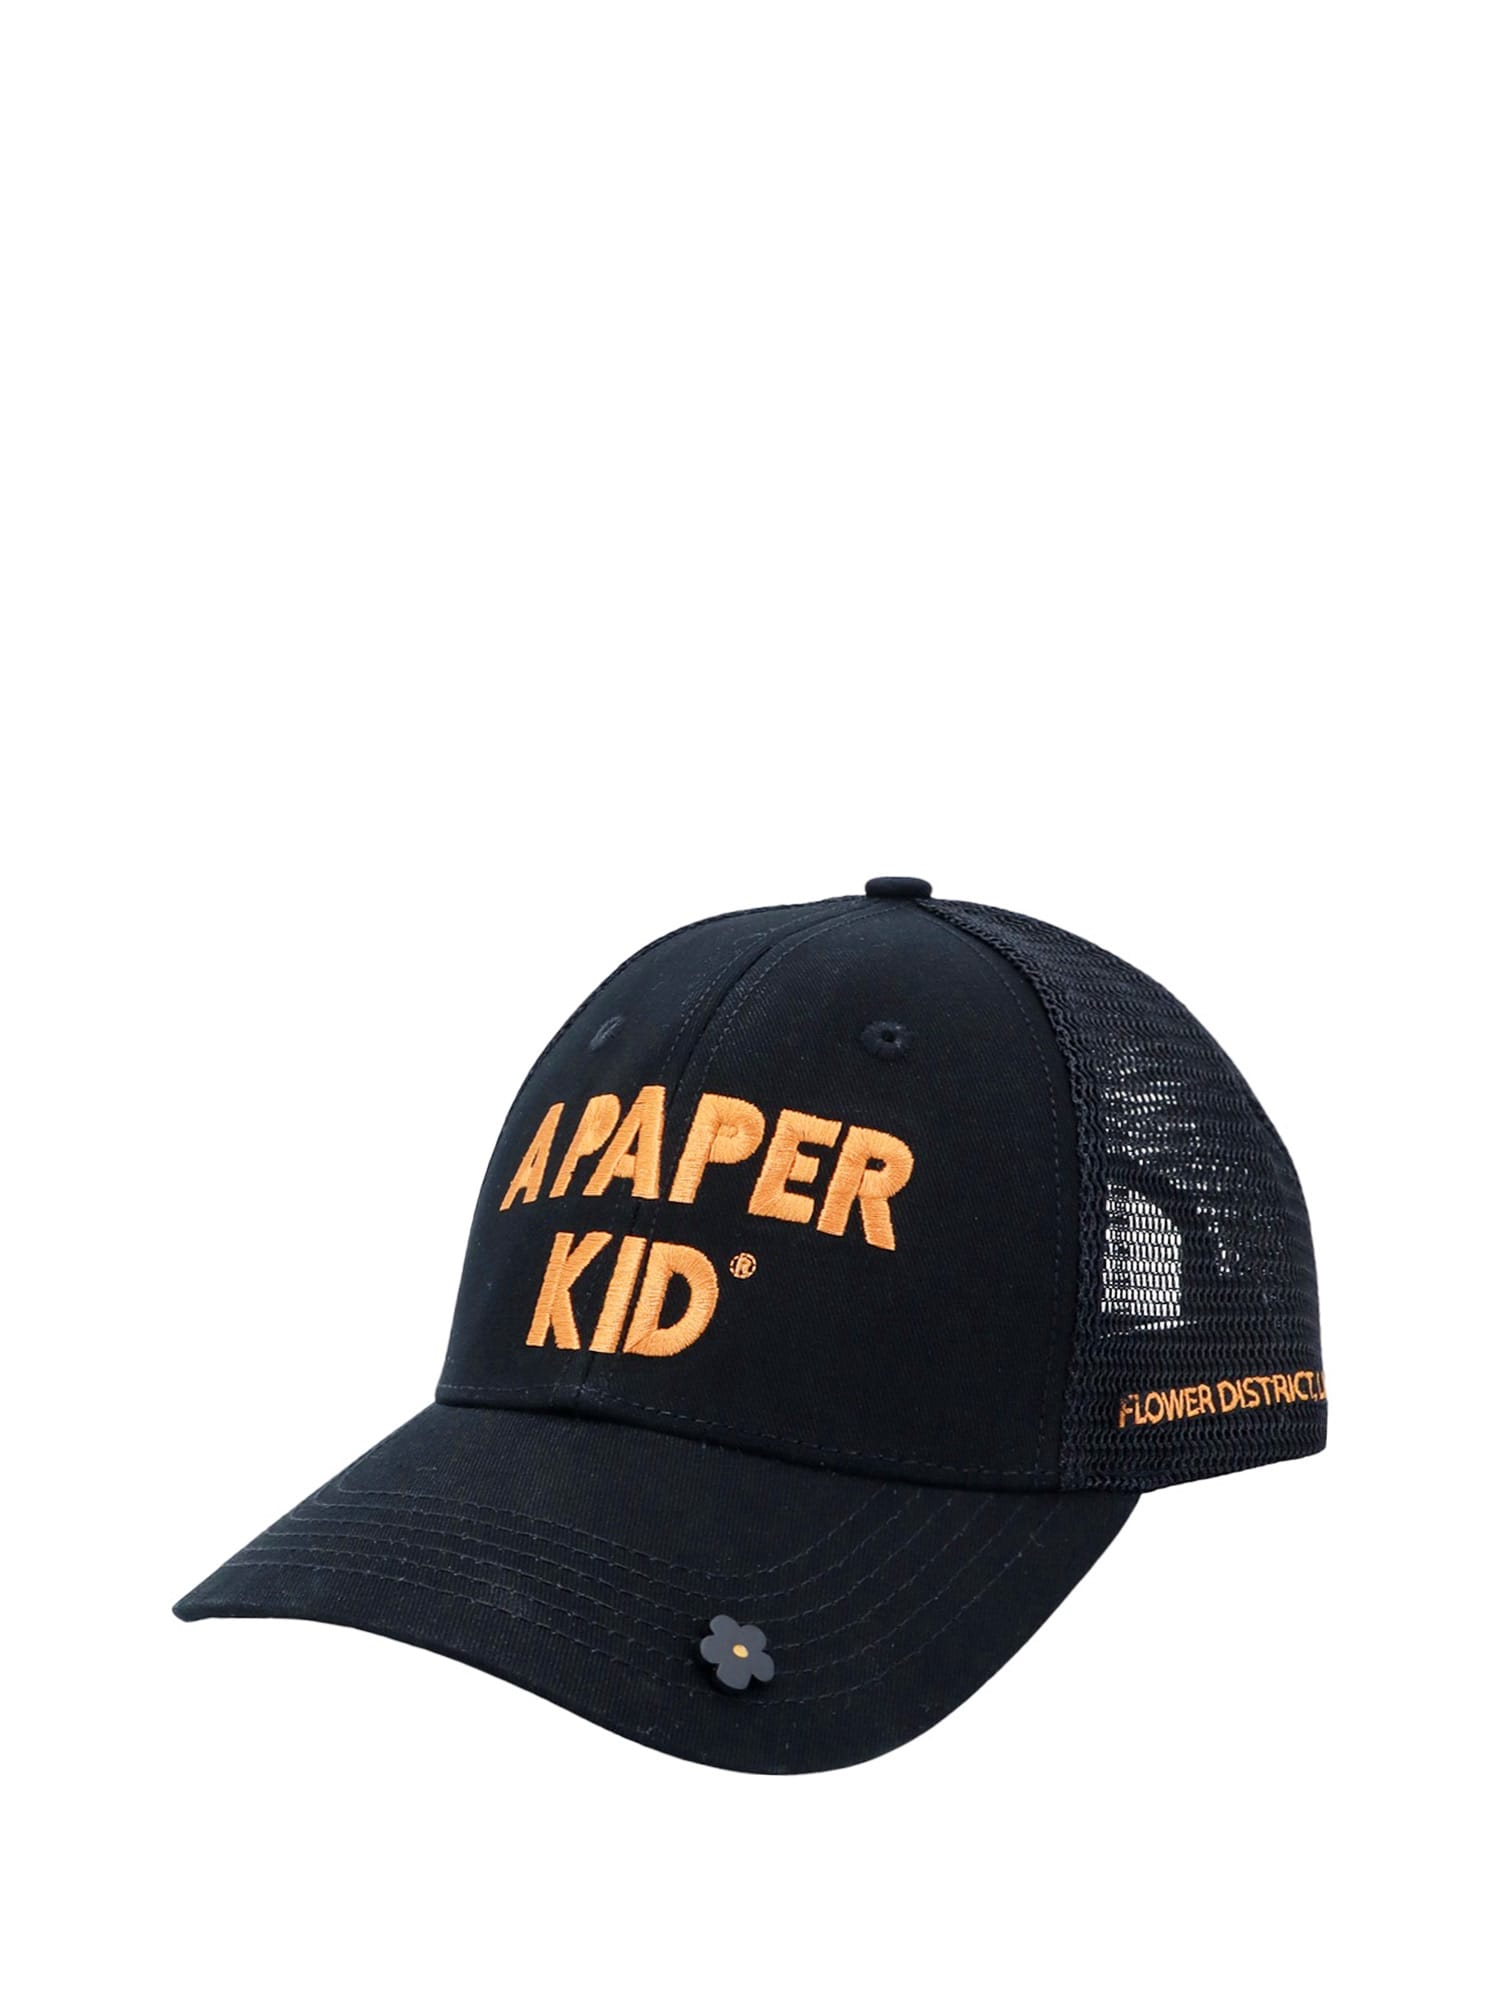 Shop A Paper Kid Hat In Black